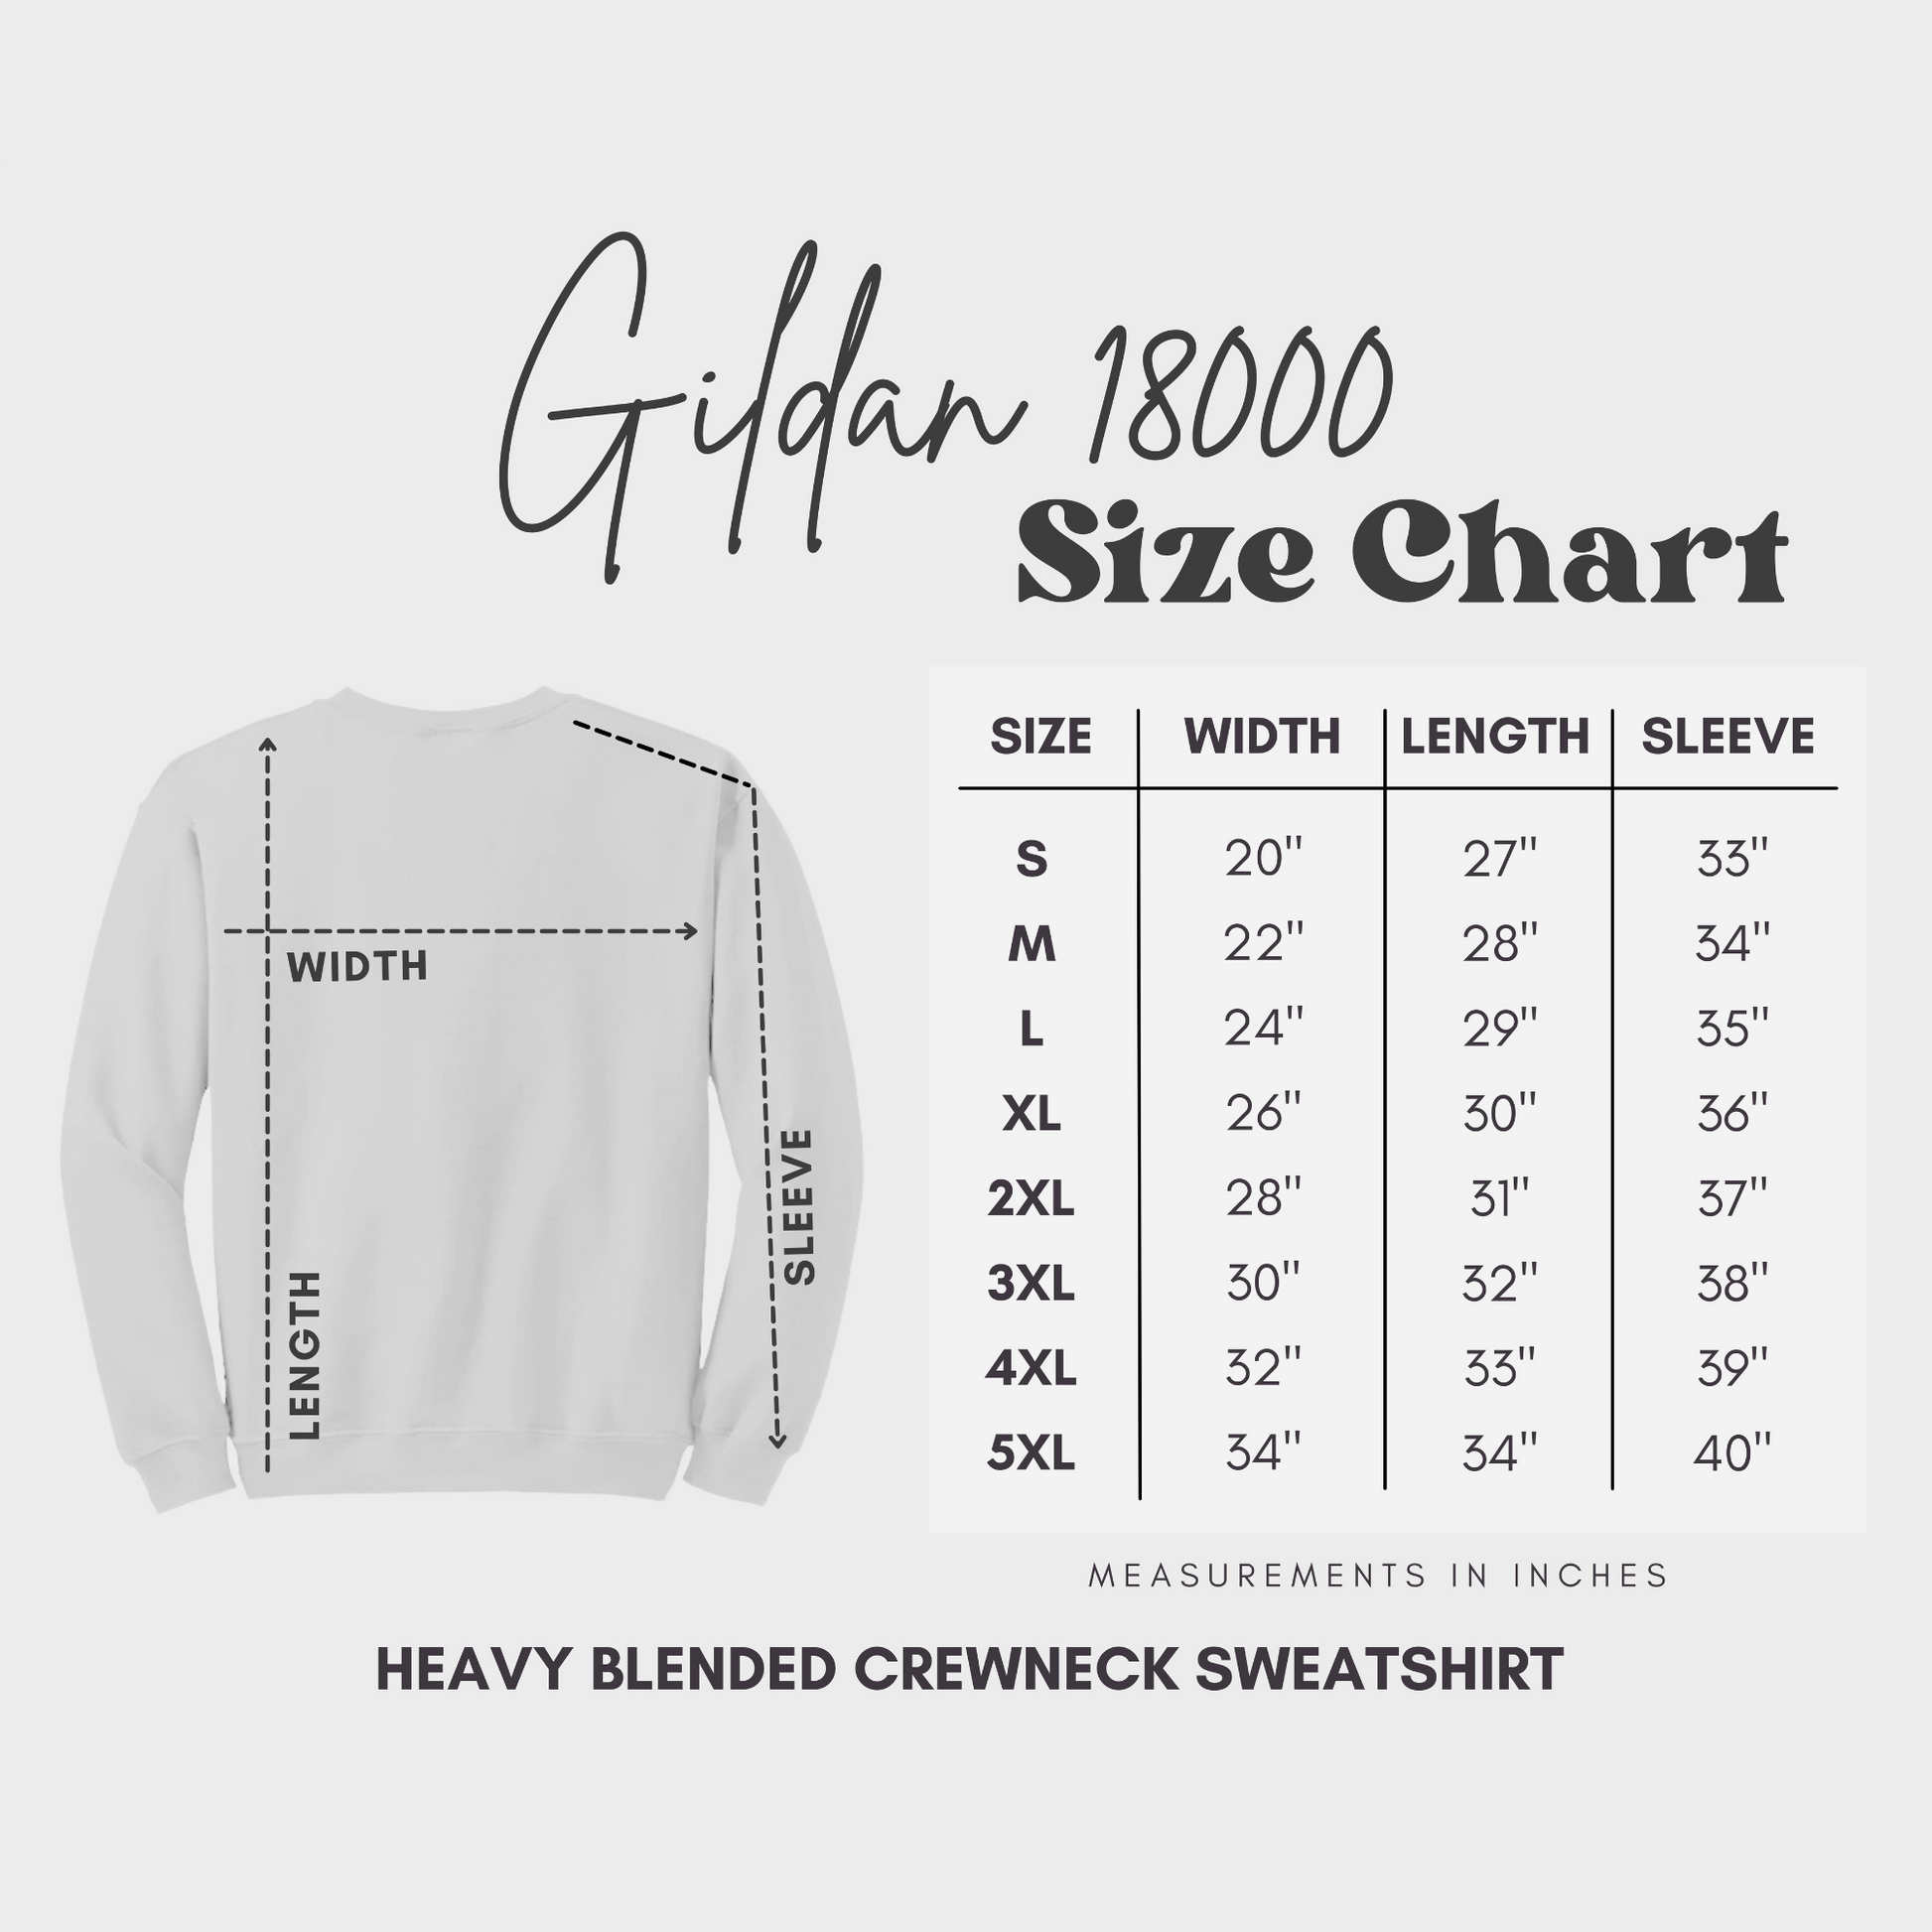 Gildan 18000 Size Chart Unisex Sweatshirt Size Chart Size Chart Mockup  Diverse Mockups, Oversized Model Mockup 